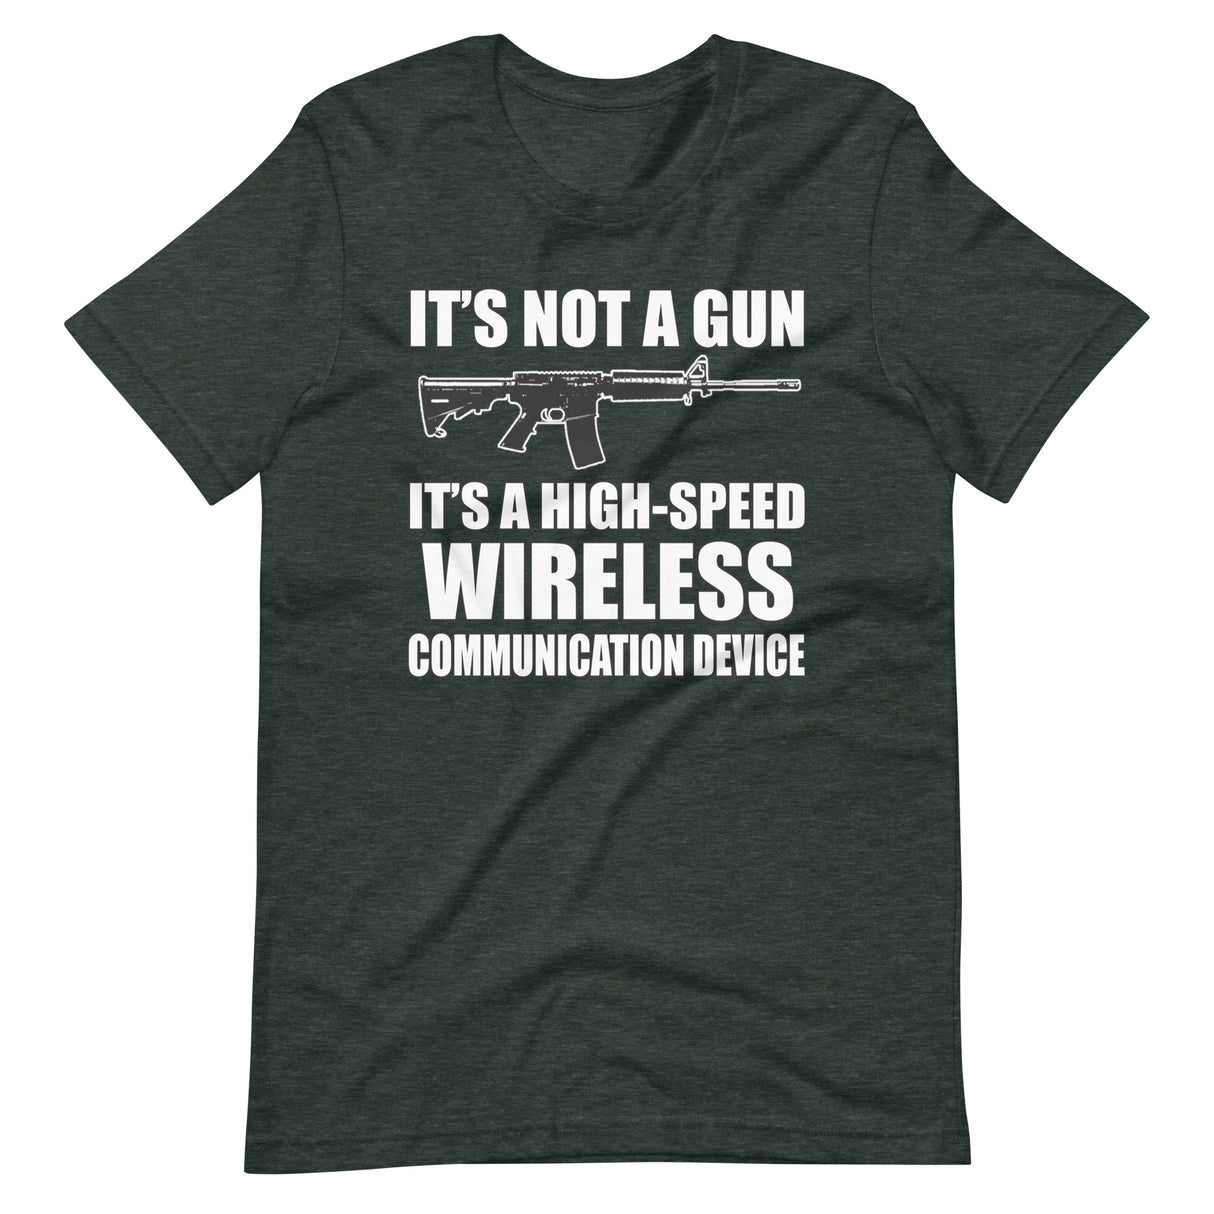 It's Not a Gun Wireless Communication Device Shirt - Libertarian Country